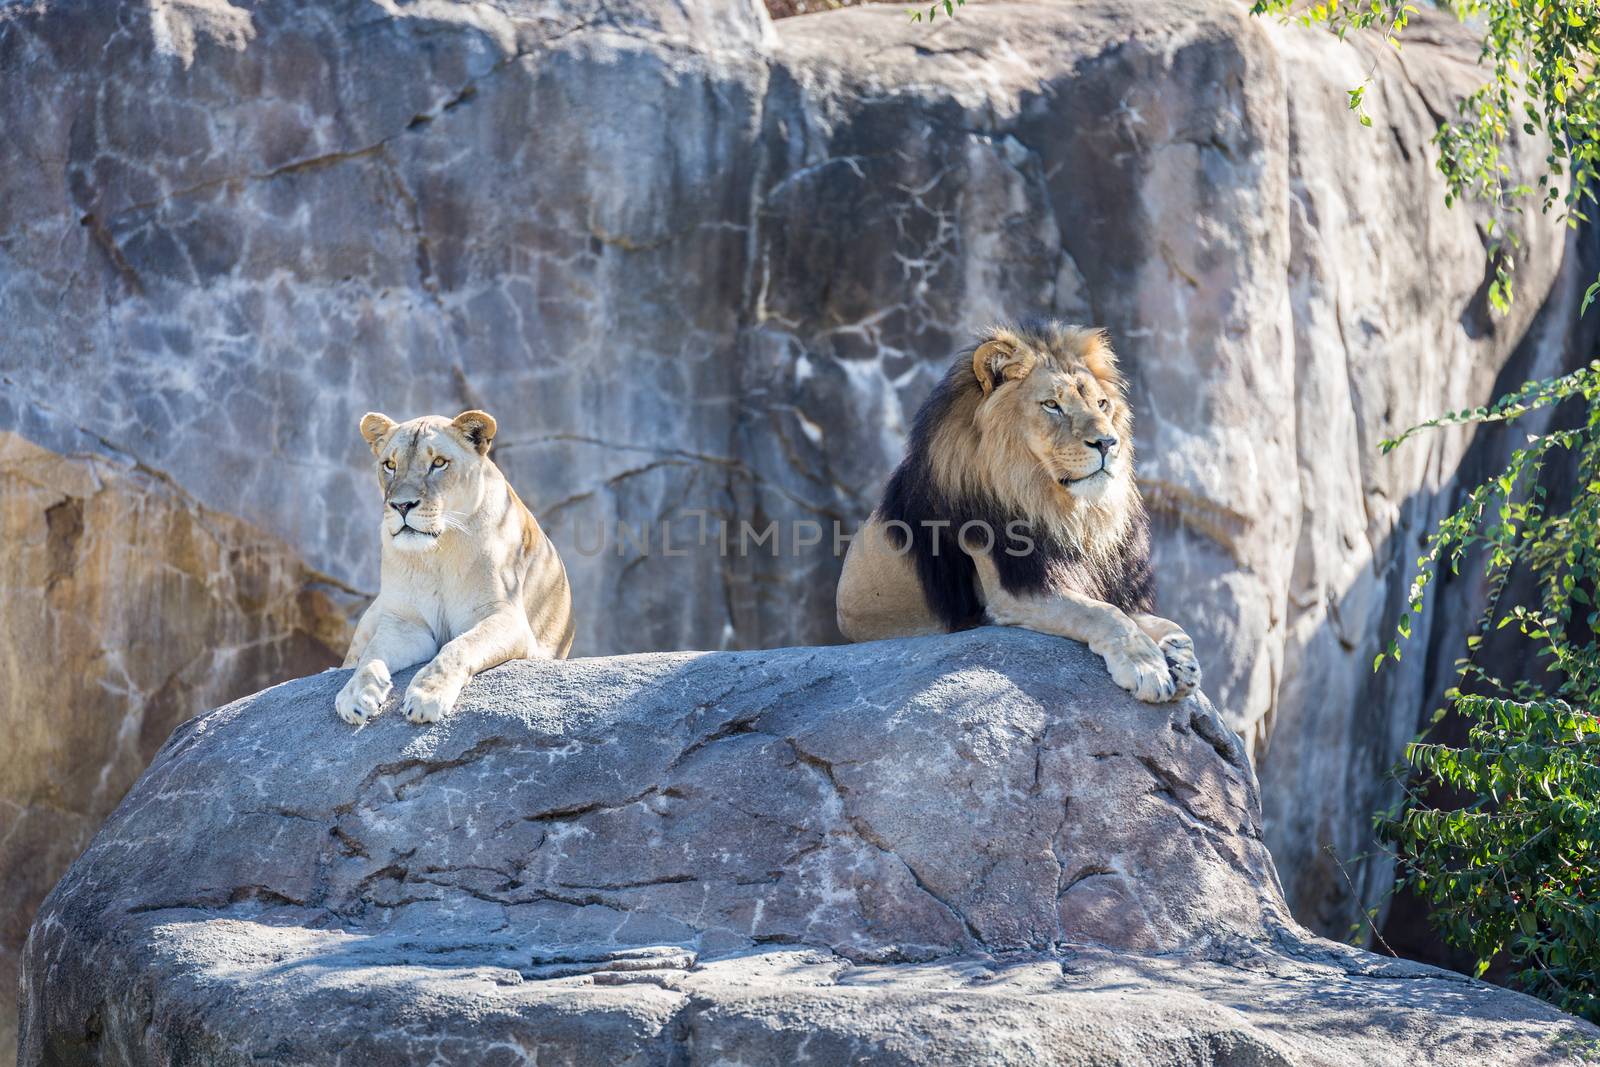 Lions on a Rock by Mojoeks